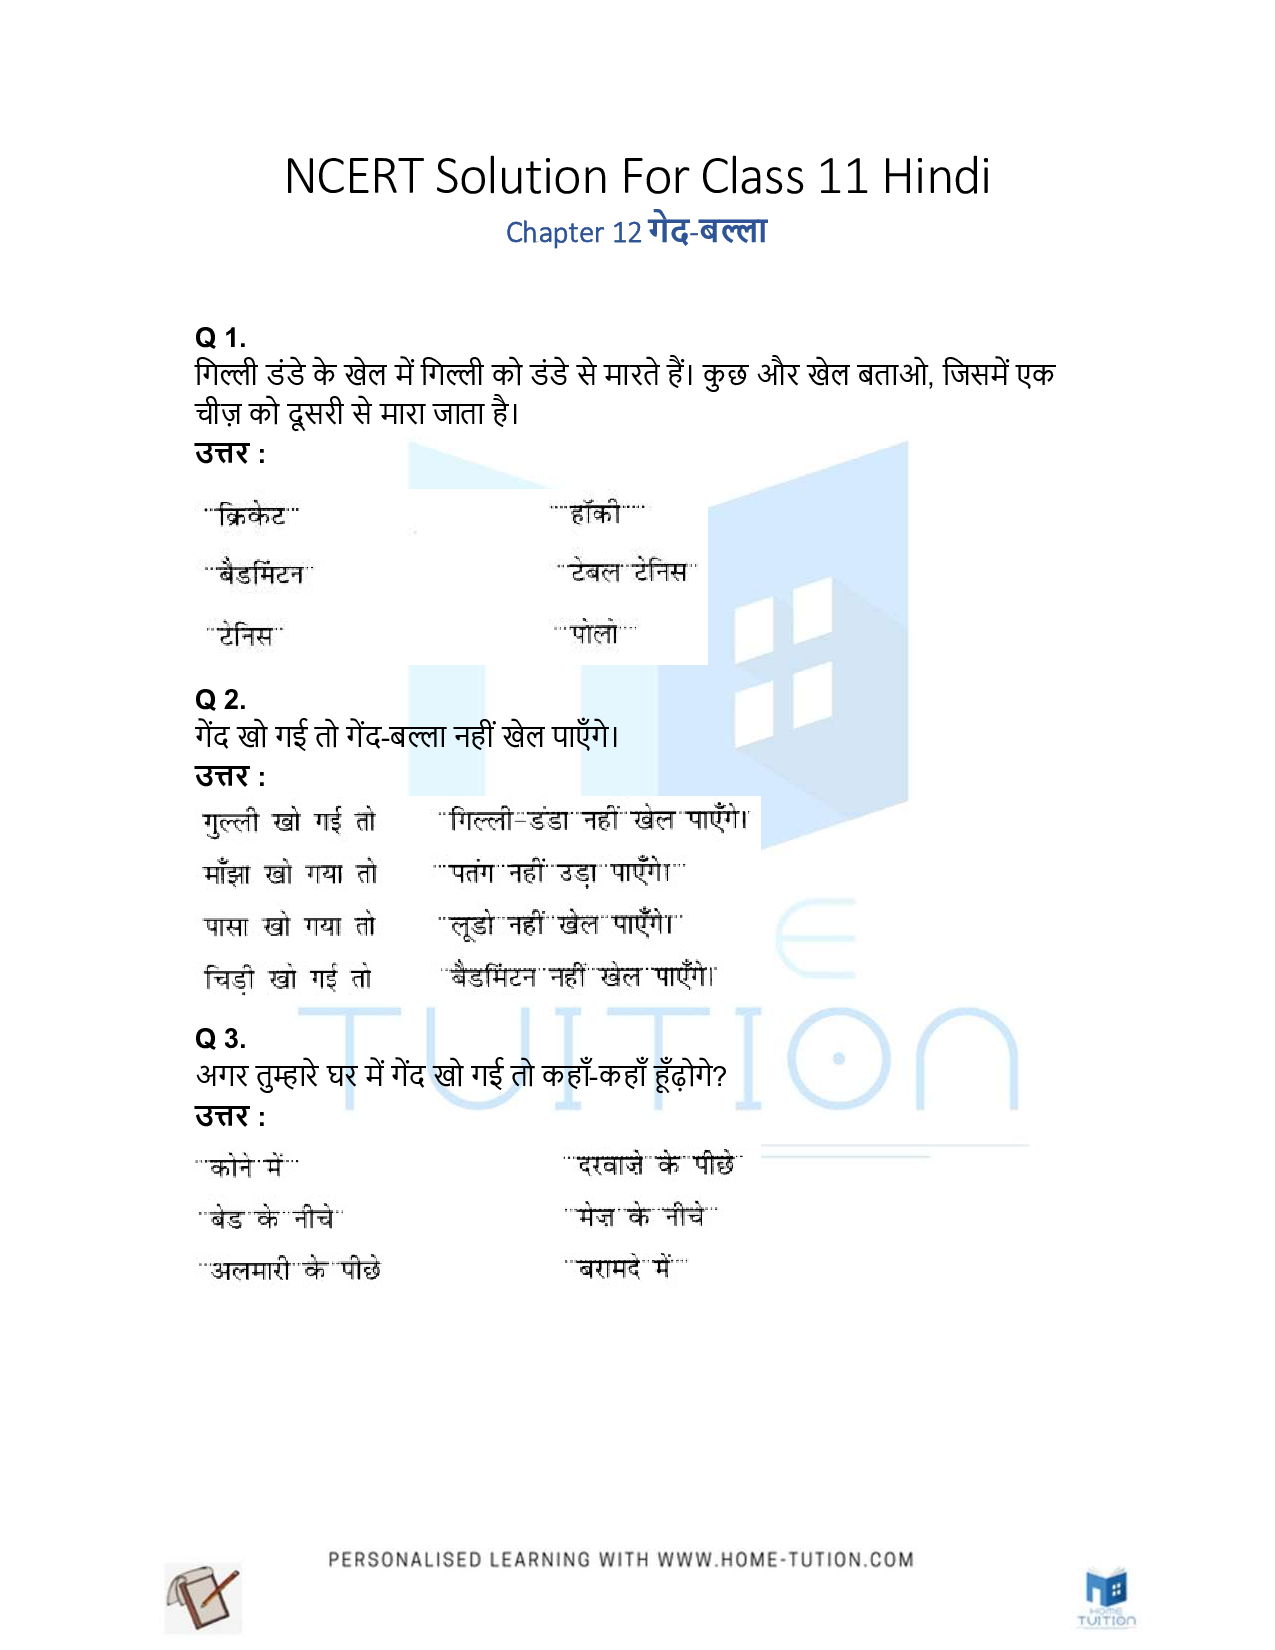 NCERT Solution for Class 1 Hindi Chapter 12 Gend Balla (गेंद-बल्ला)